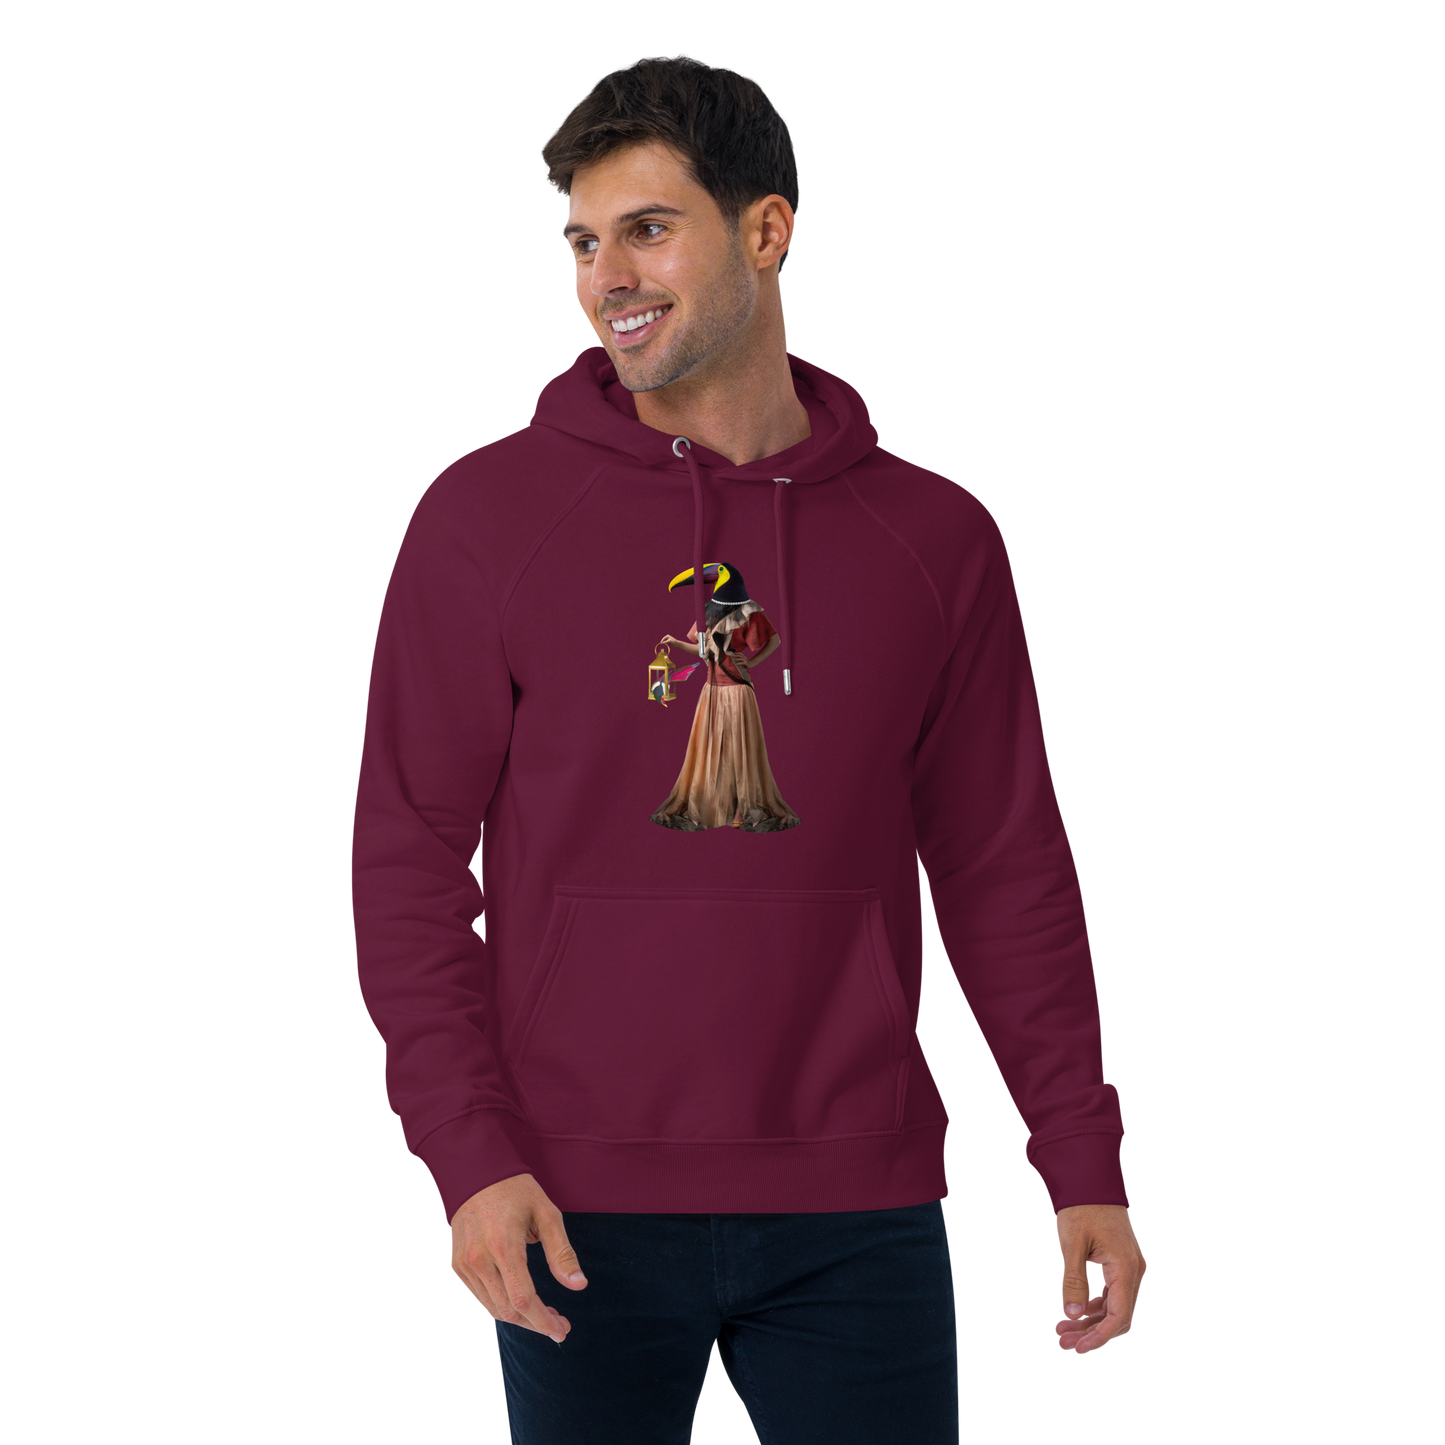 Smiling man wearing a Burgundy Anthropomorphic Toucan Raglan Hoodie featuring a amusing Anthropomorphic Toucan graphic on the chest - Funny Graphic Toucan Hoodies - Boozy Fox